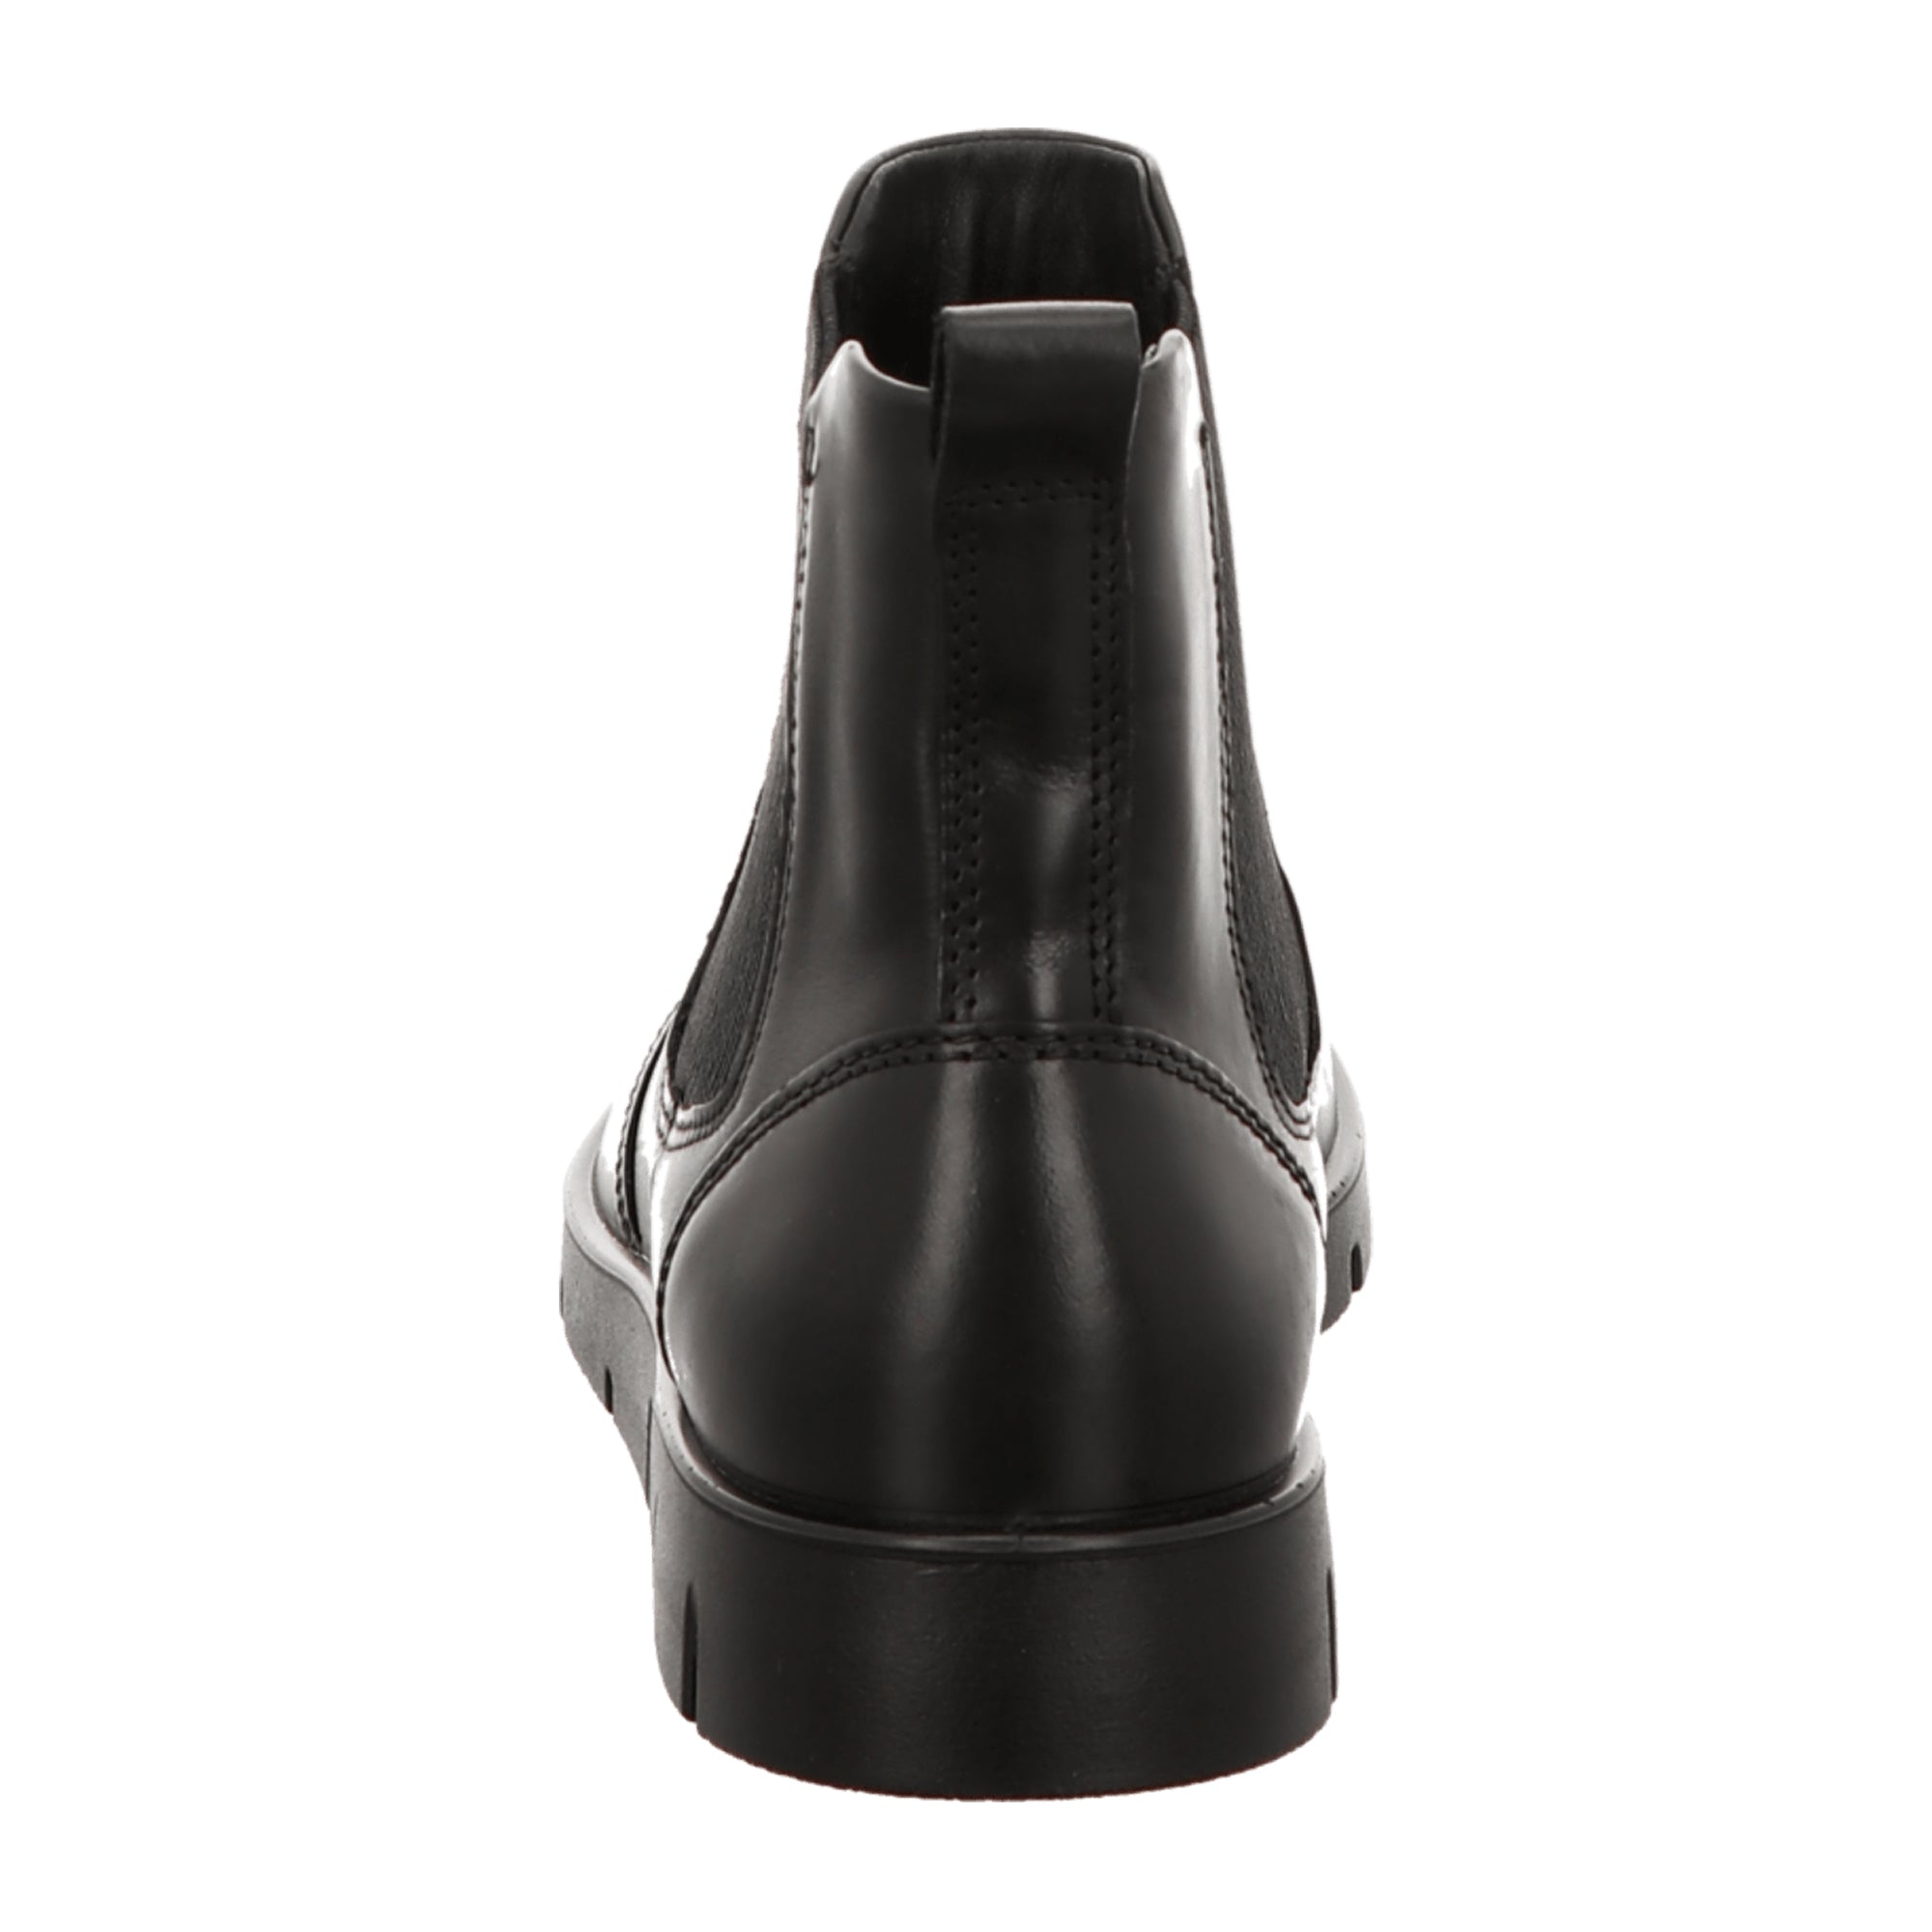 Ecco Bella Women's Stylish Black Leather Shoes - Durable & Trendy